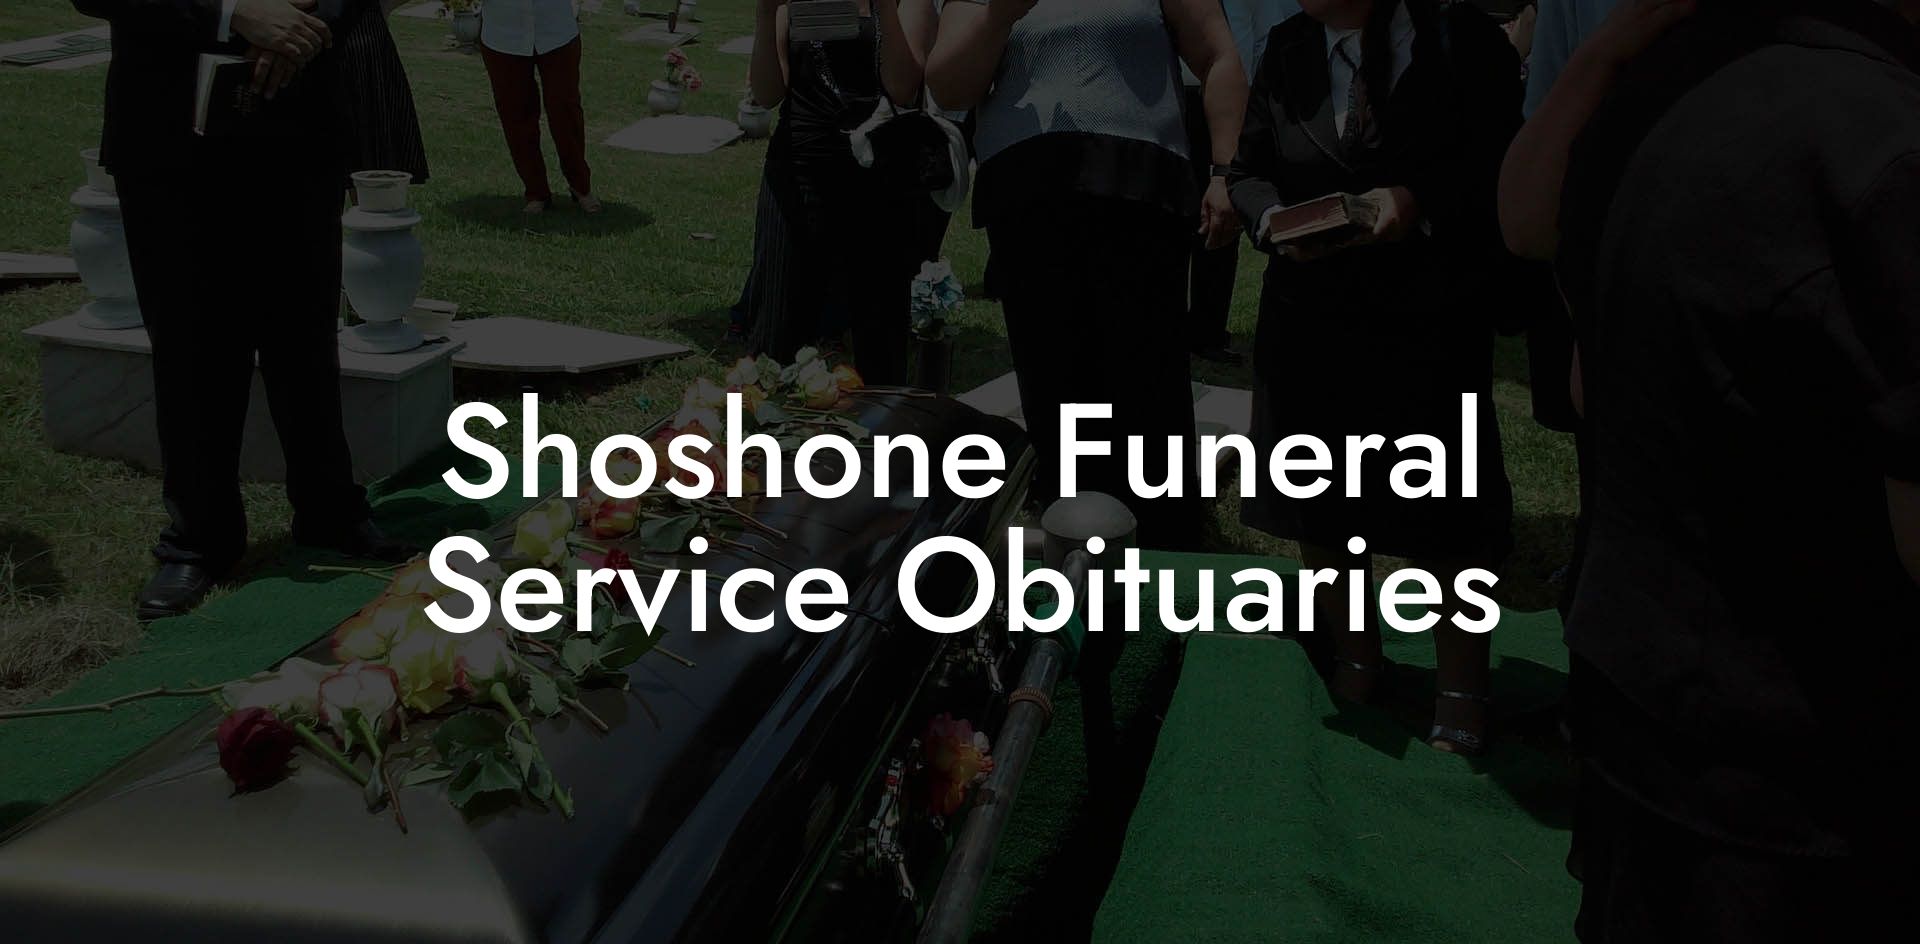 Shoshone Funeral Service Obituaries